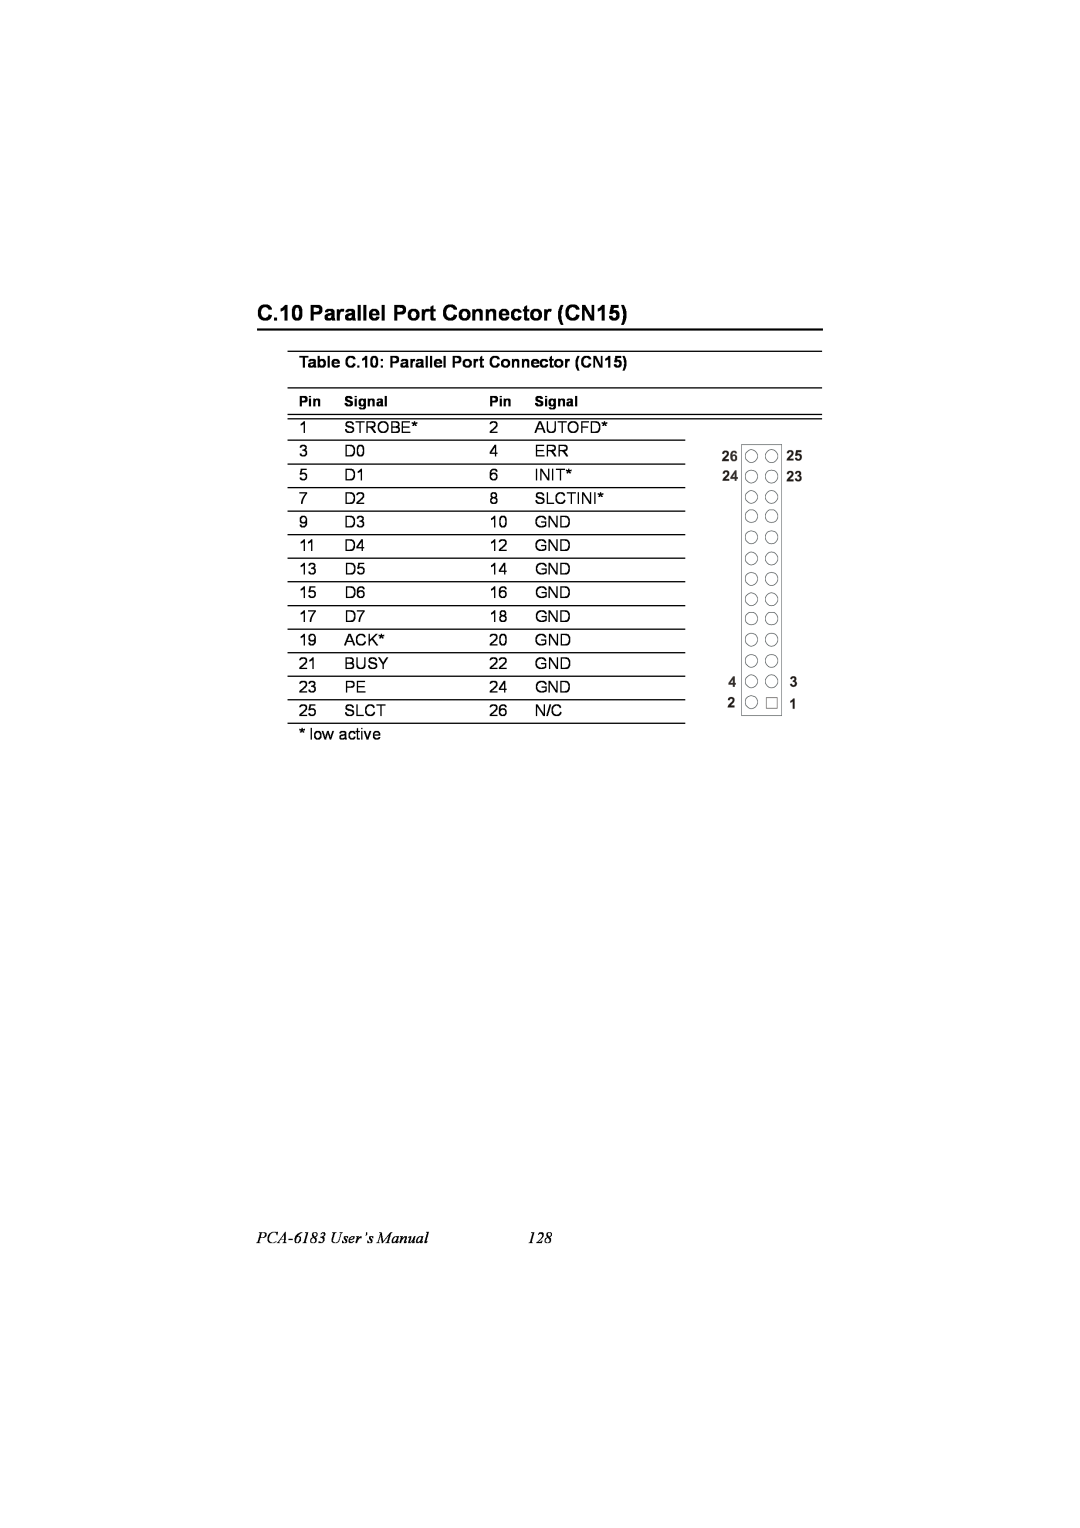 IBM PCM-9575, 100/10 user manual Table C.10 Parallel Port Connector CN15, PCA-6183 User’s Manual 